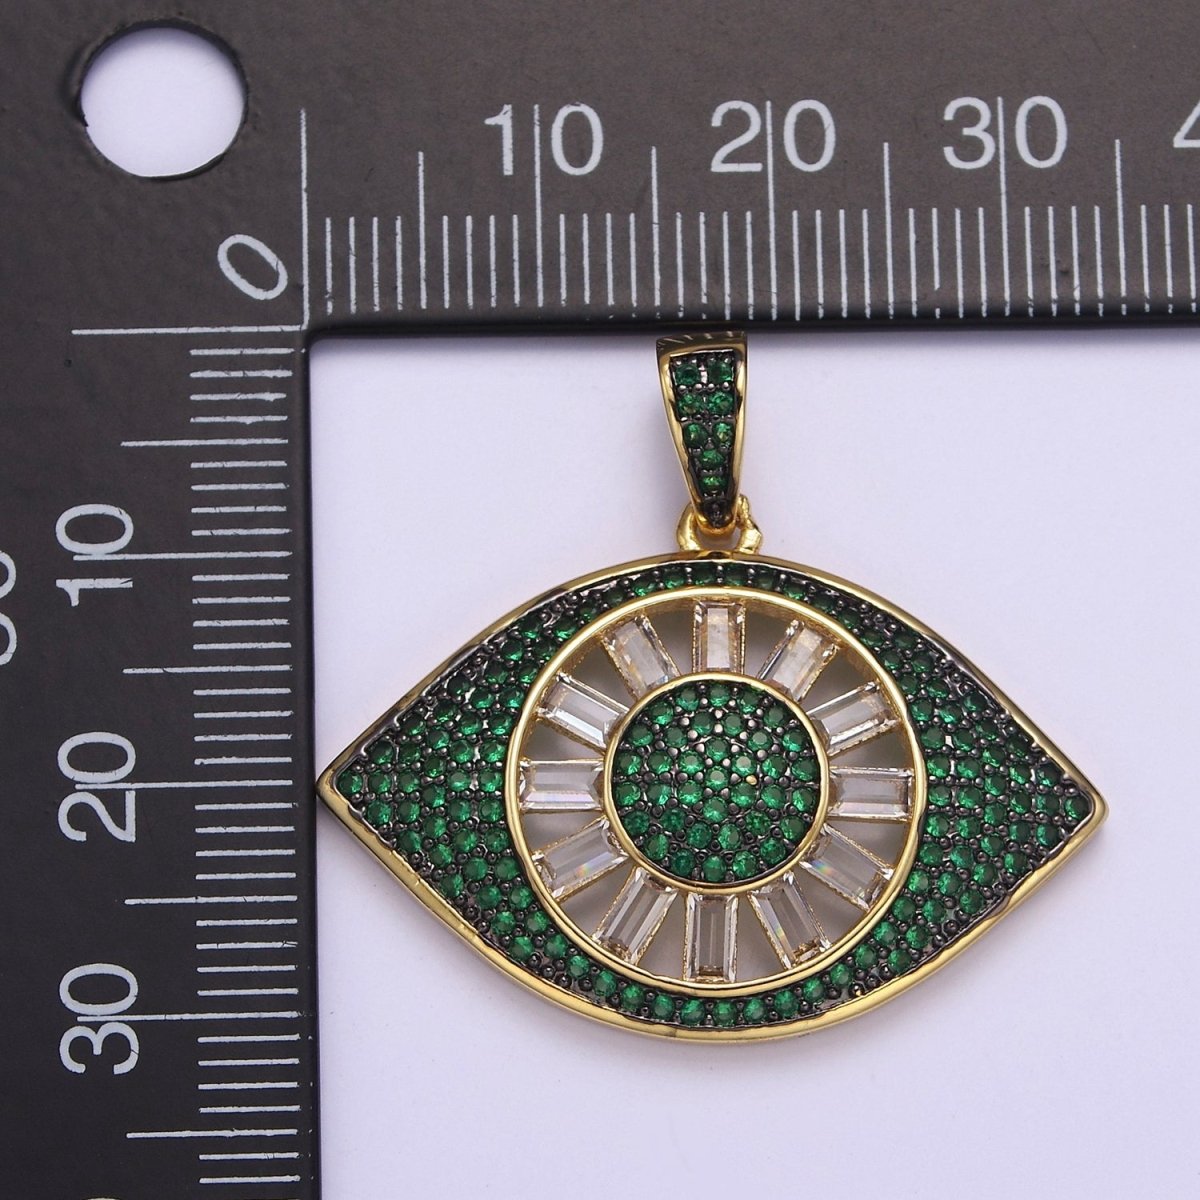 Micro Pave Evil Eye Pendant, Lucky Eye Shaped Pave Pendant, Gold Filled Protection Eye charm J-725 J-726 J-728 J-729 J-732 - DLUXCA